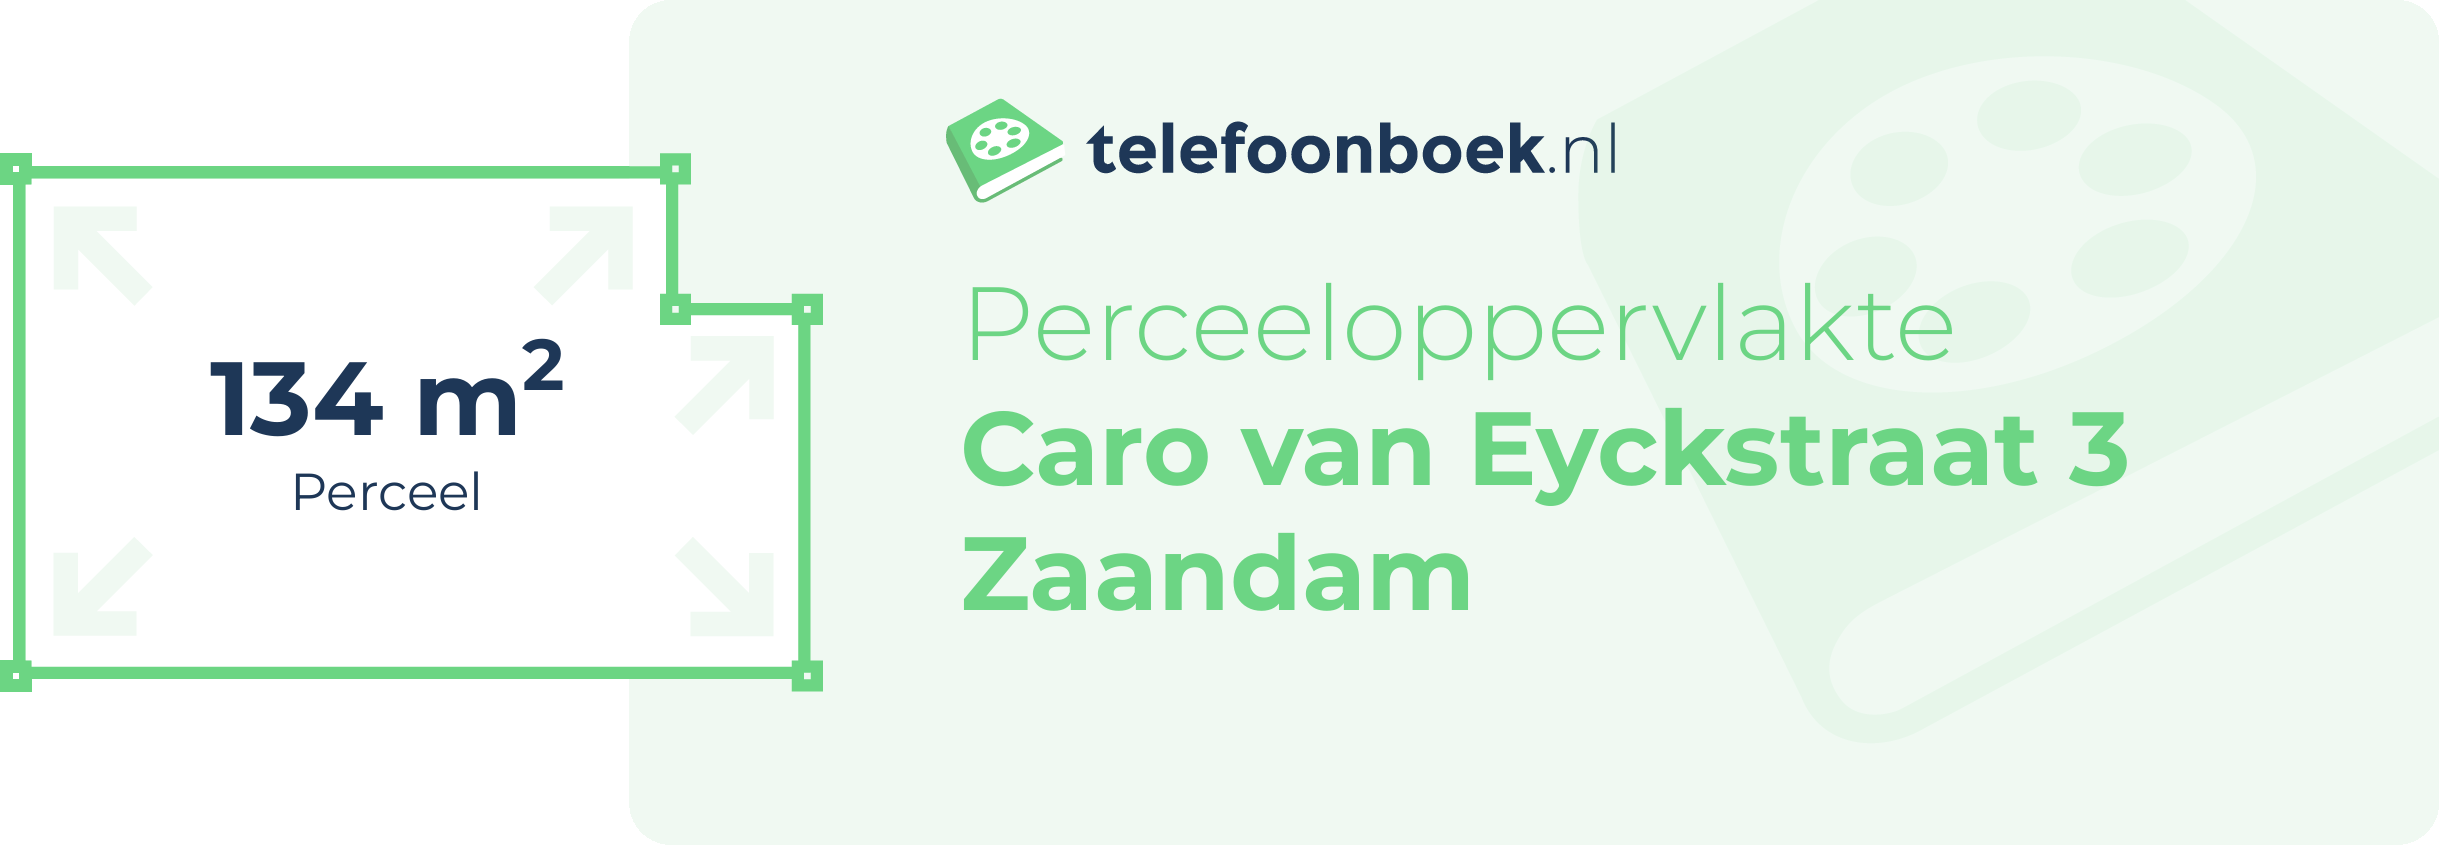 Perceeloppervlakte Caro Van Eyckstraat 3 Zaandam